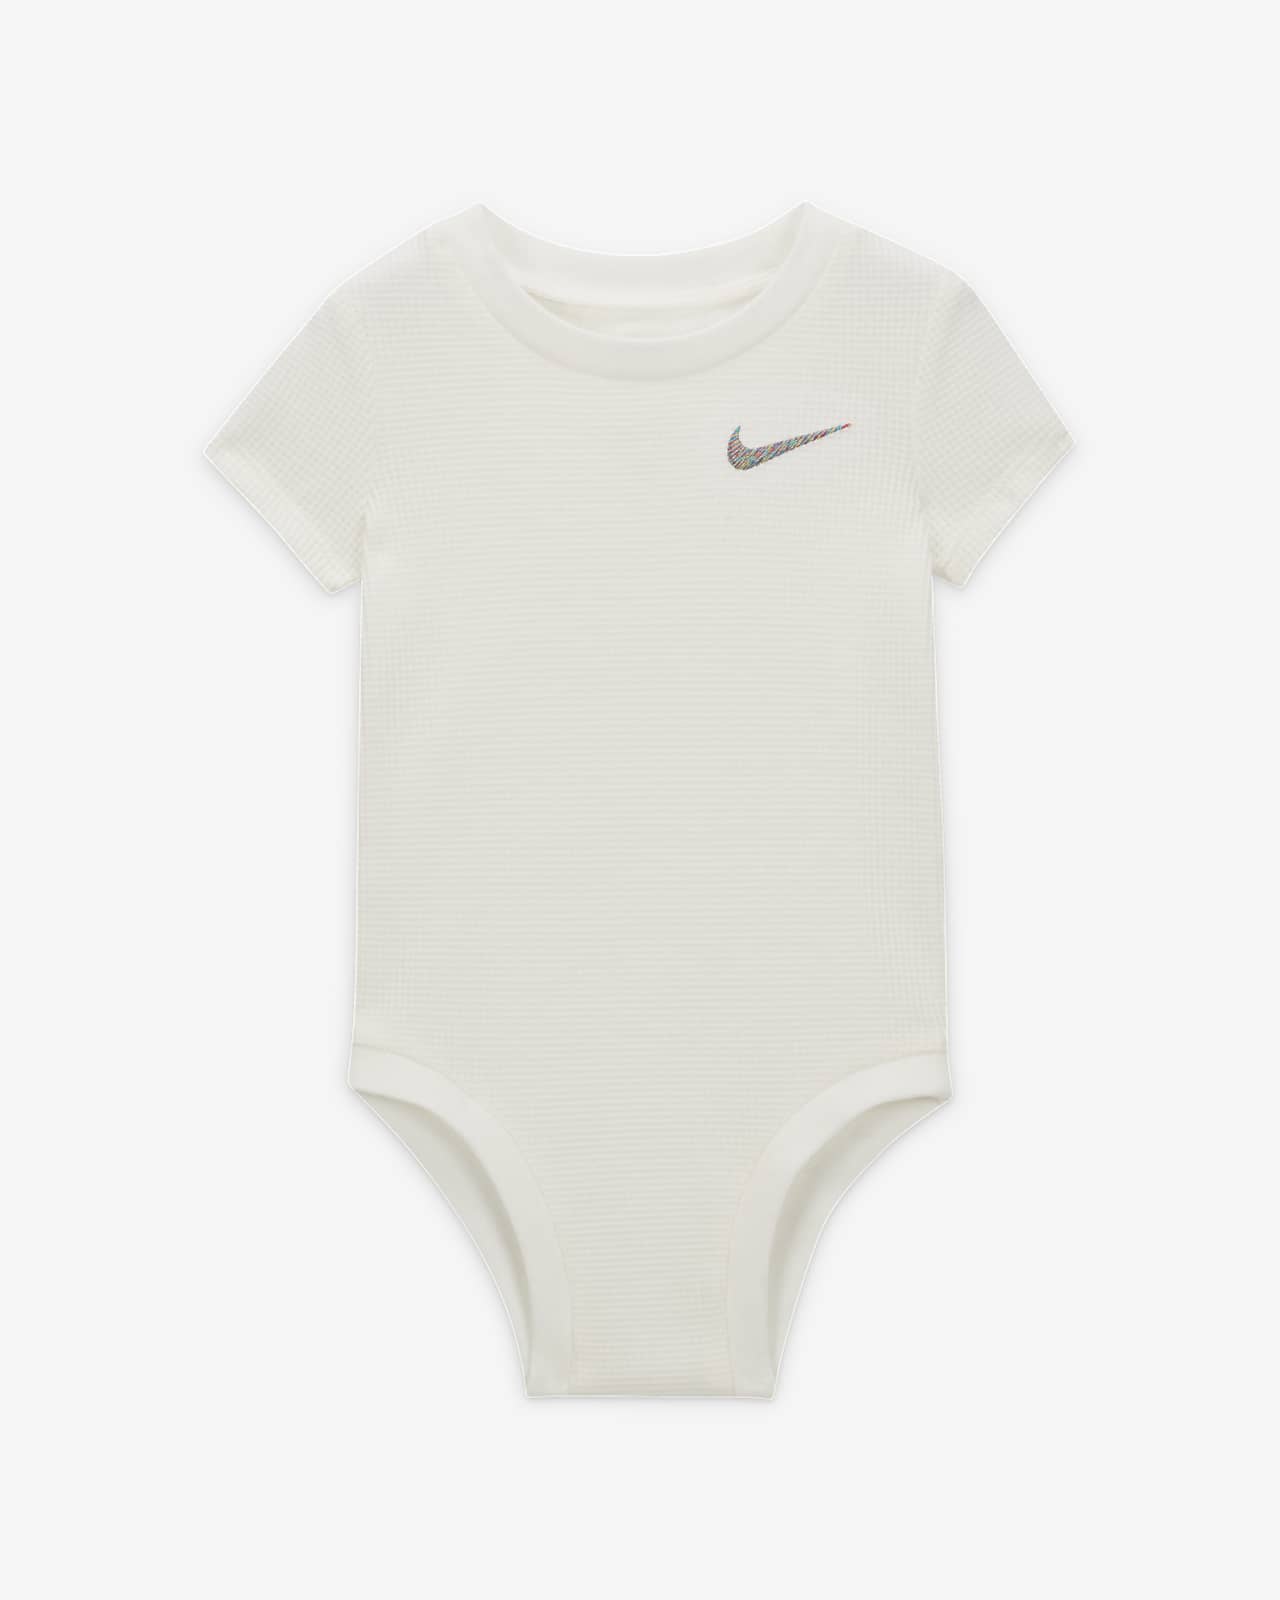 Nike ReadySet Baby (0-9M) Bodysuit